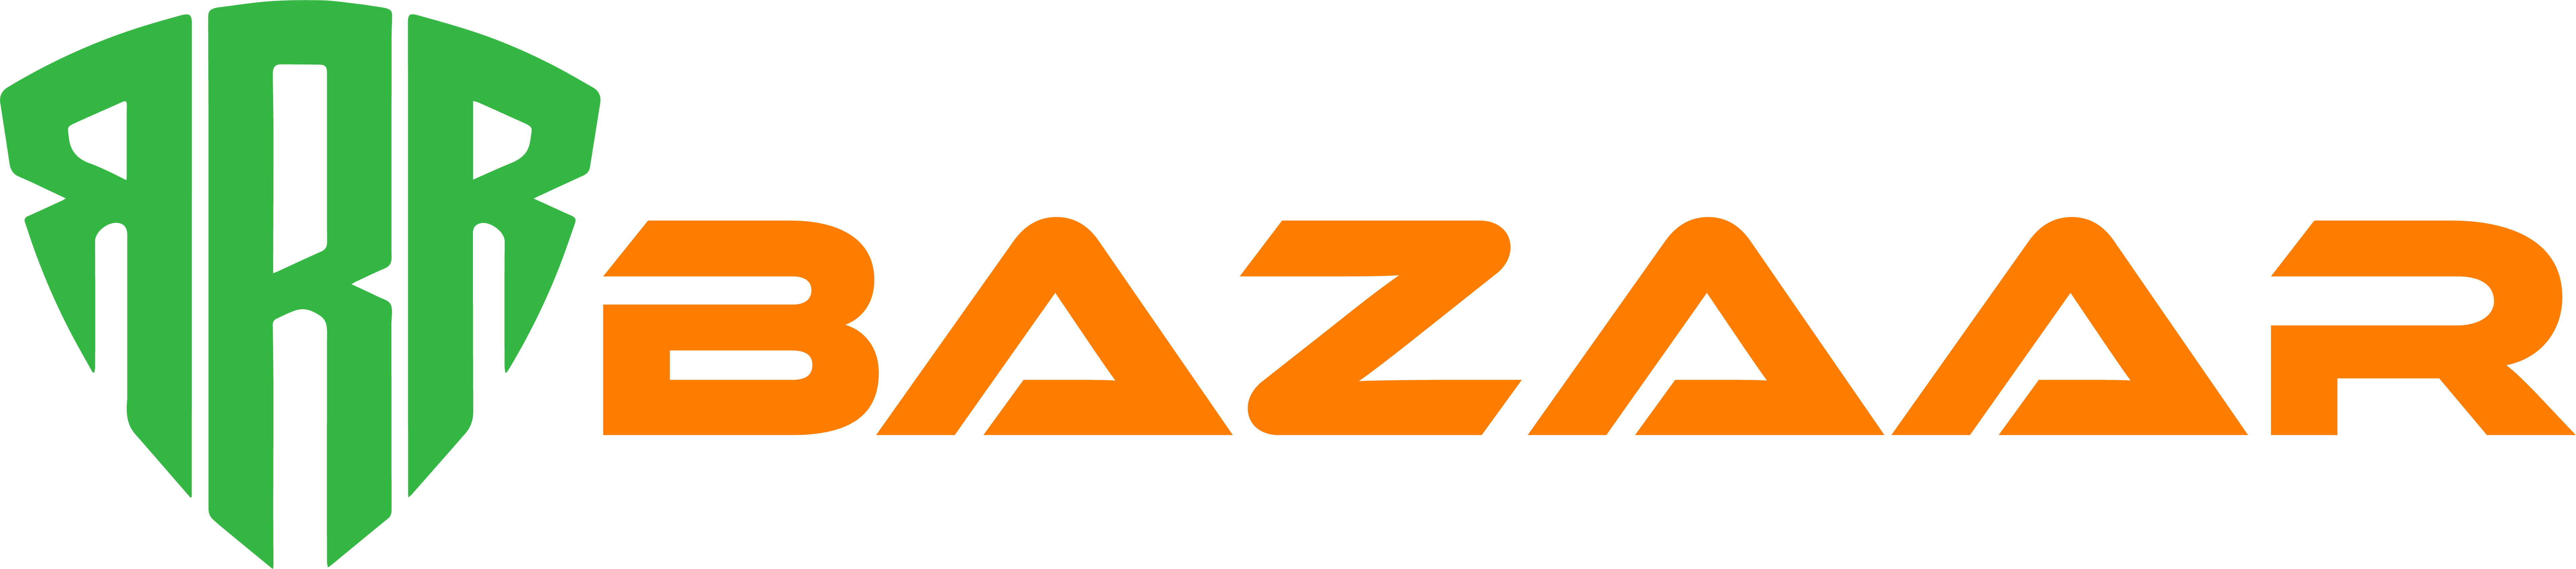 Bazaar | Products